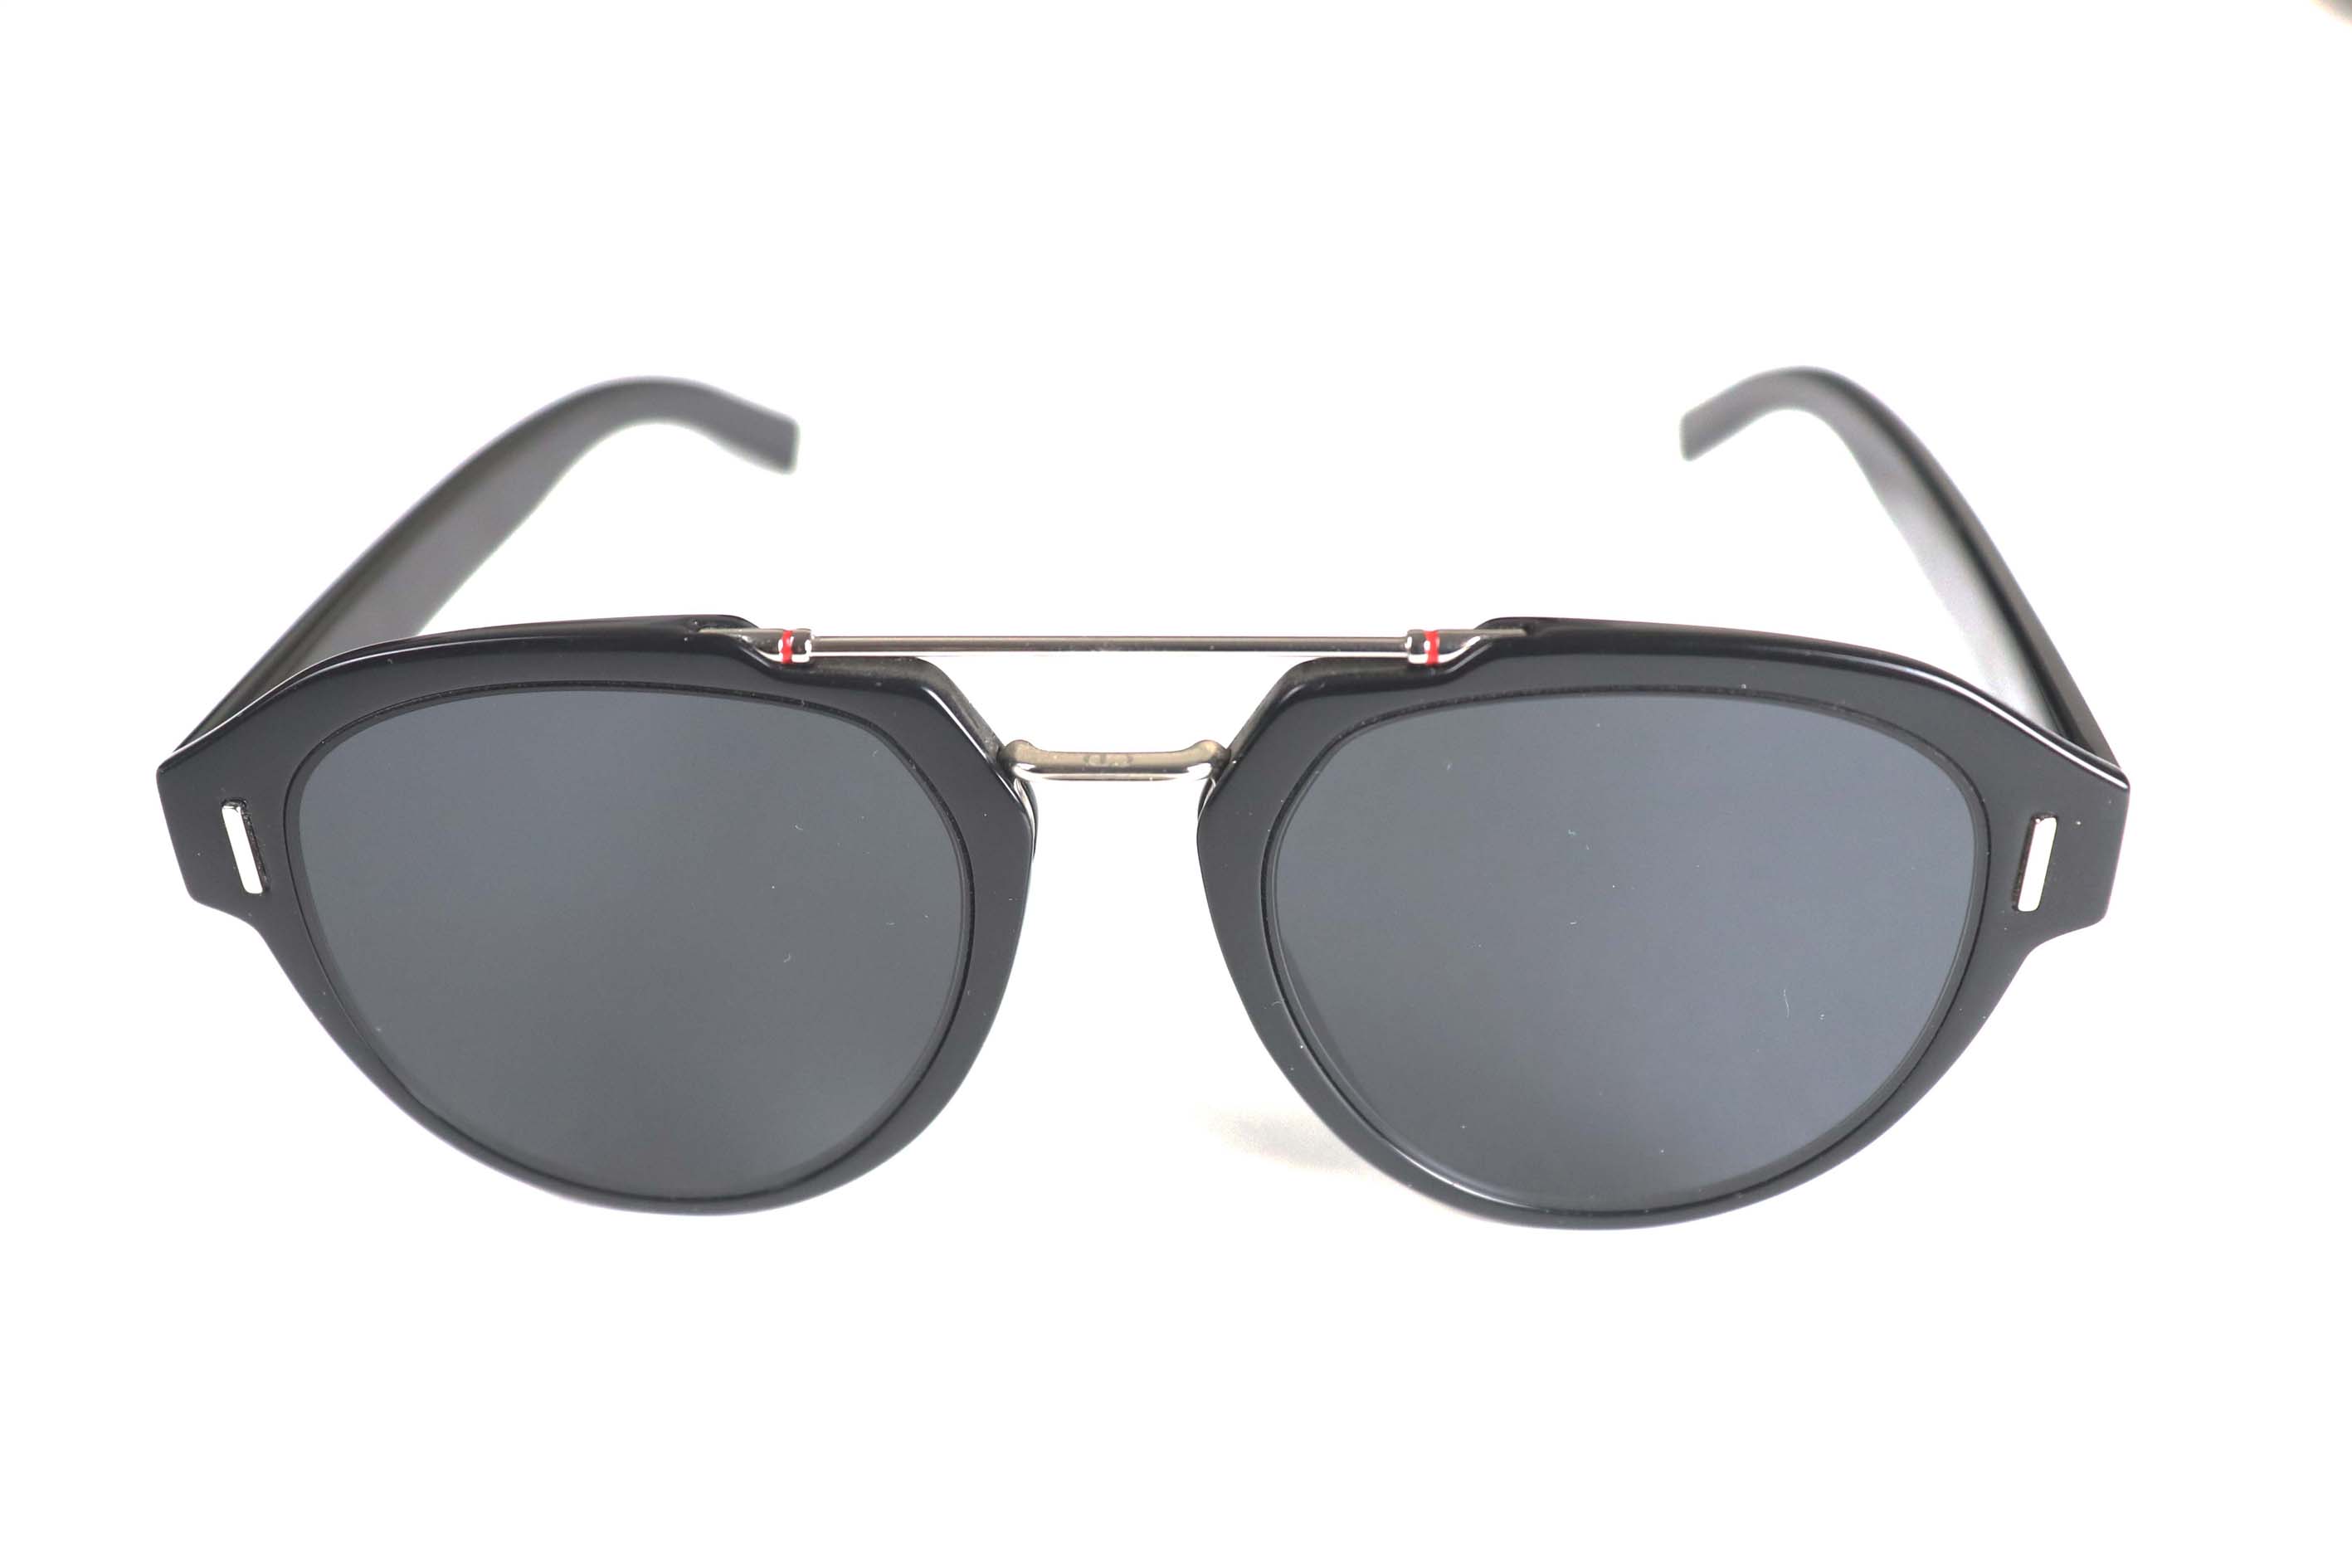 Christian Dior Sunglasses-Dior Fractions-8072k-50-21-150